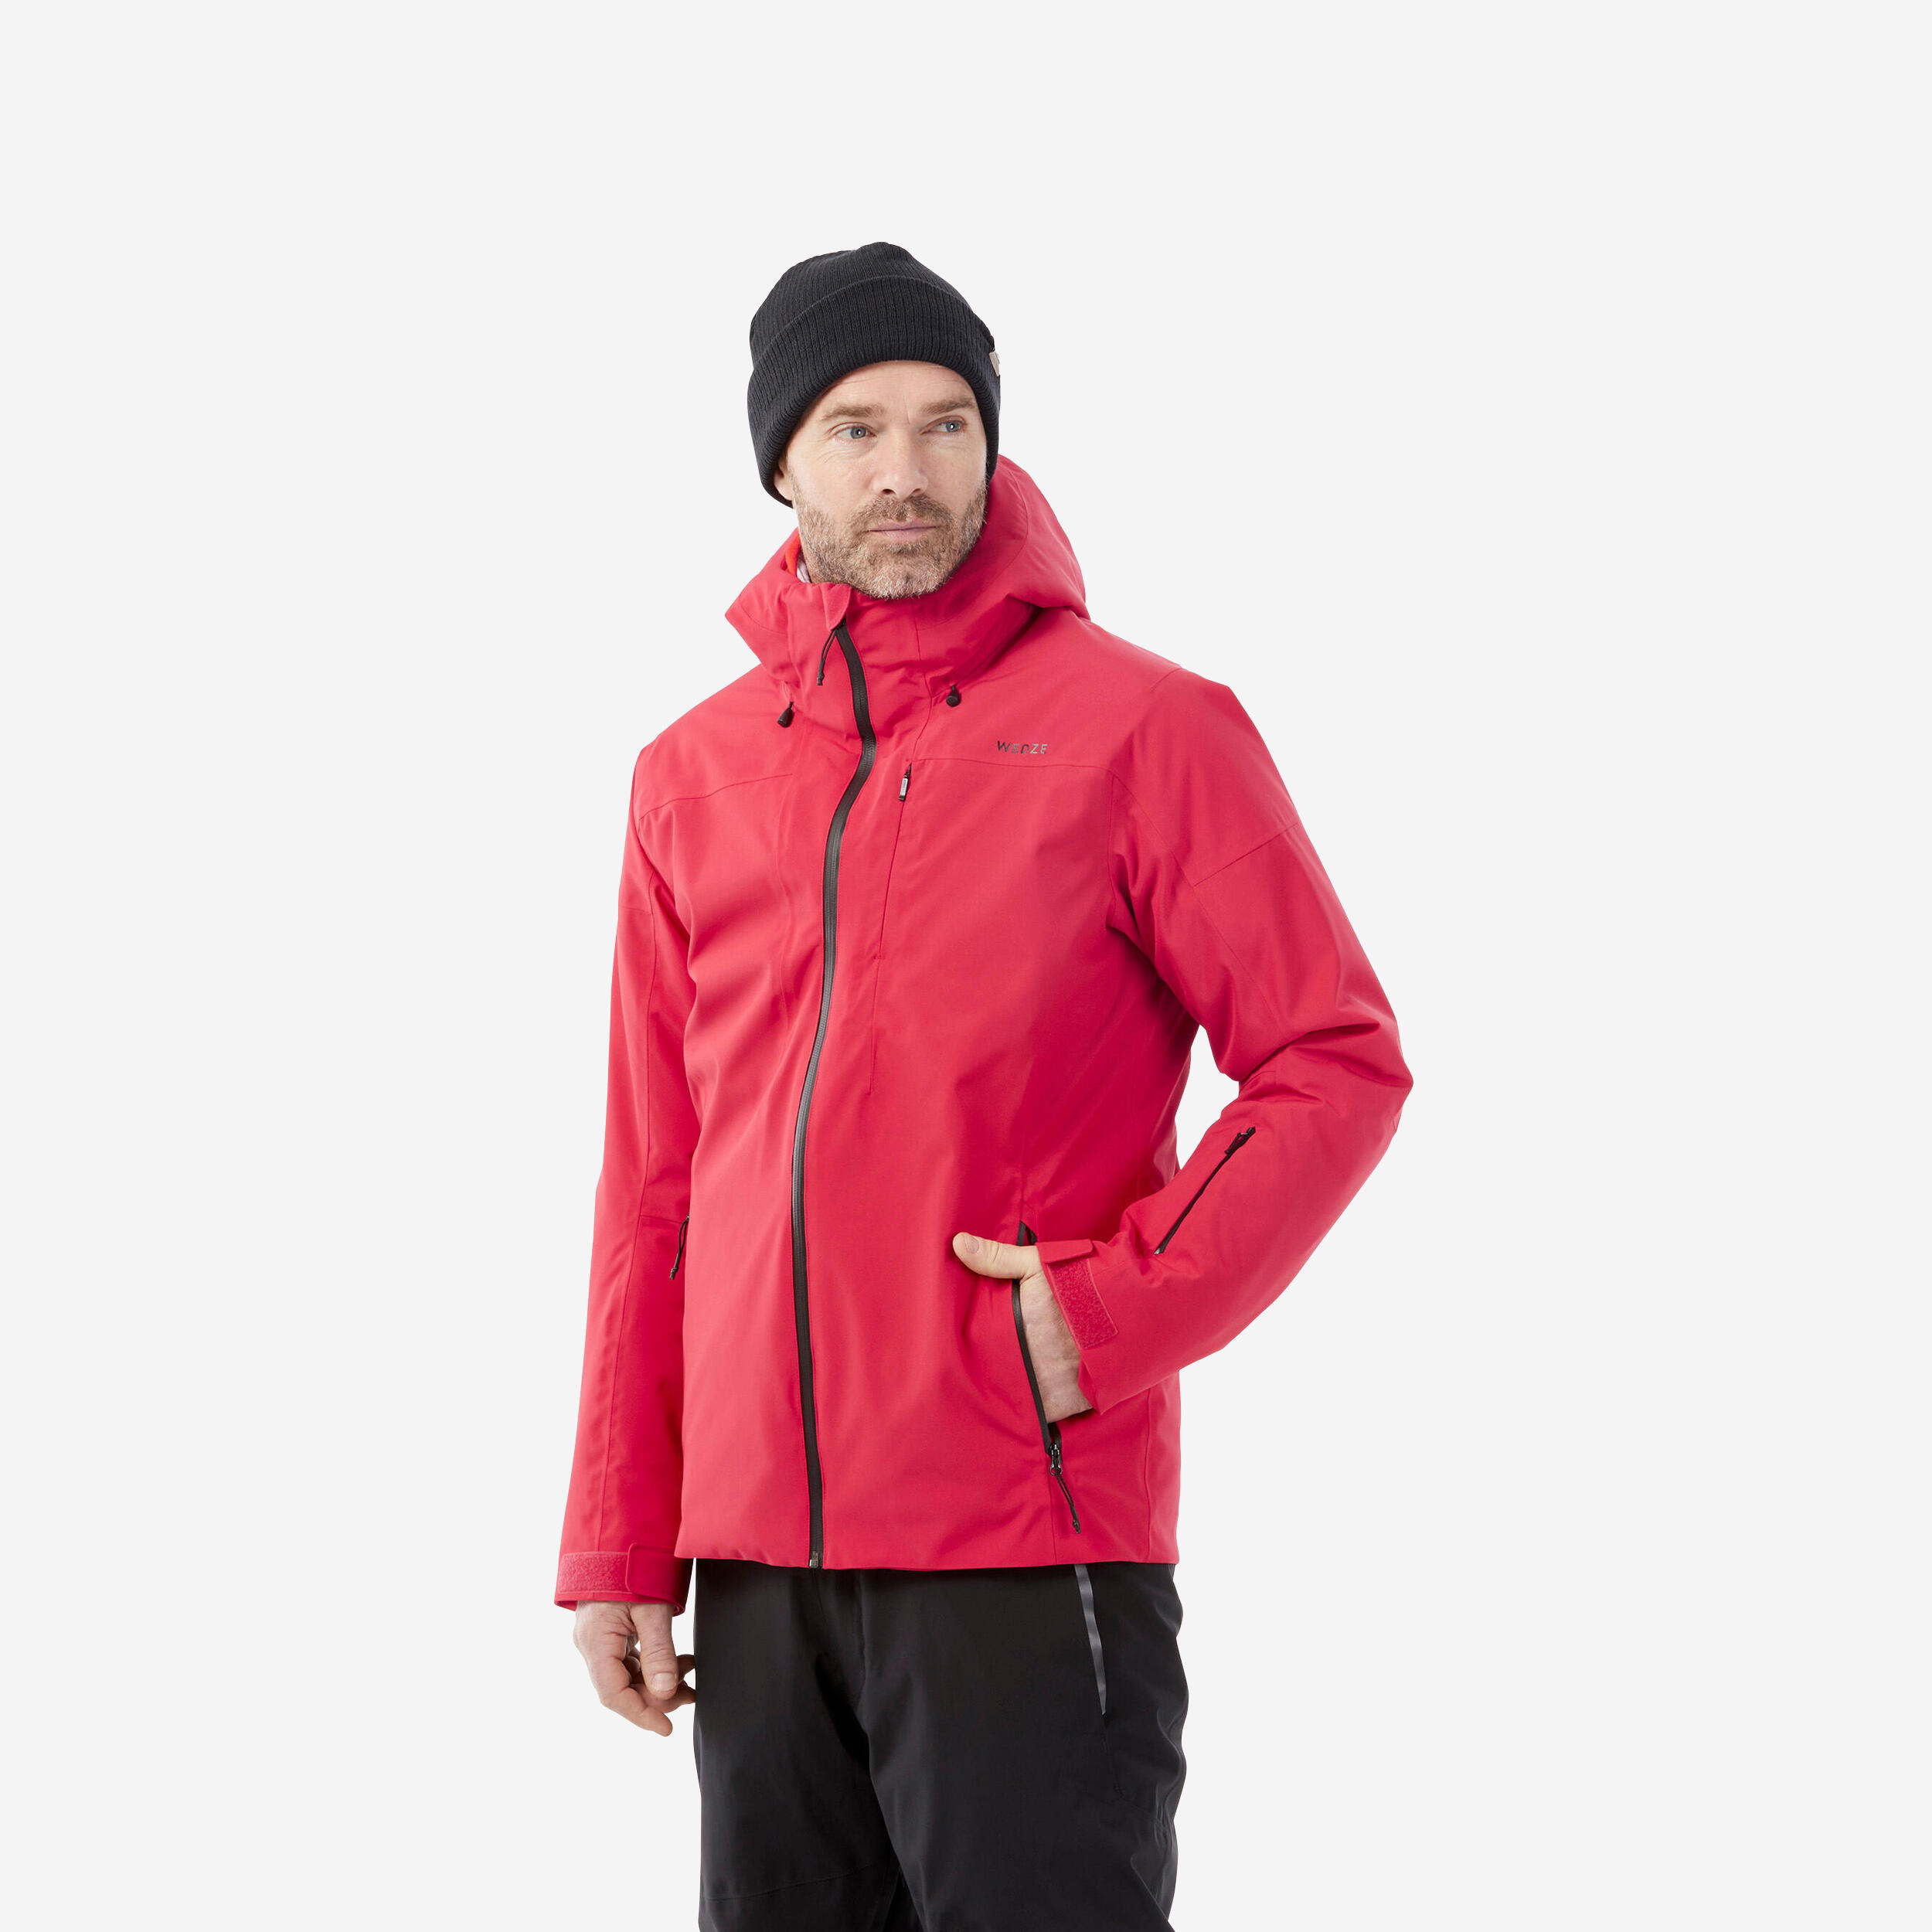 WEDZE Men’s Warm Ski Jacket 500 - Red